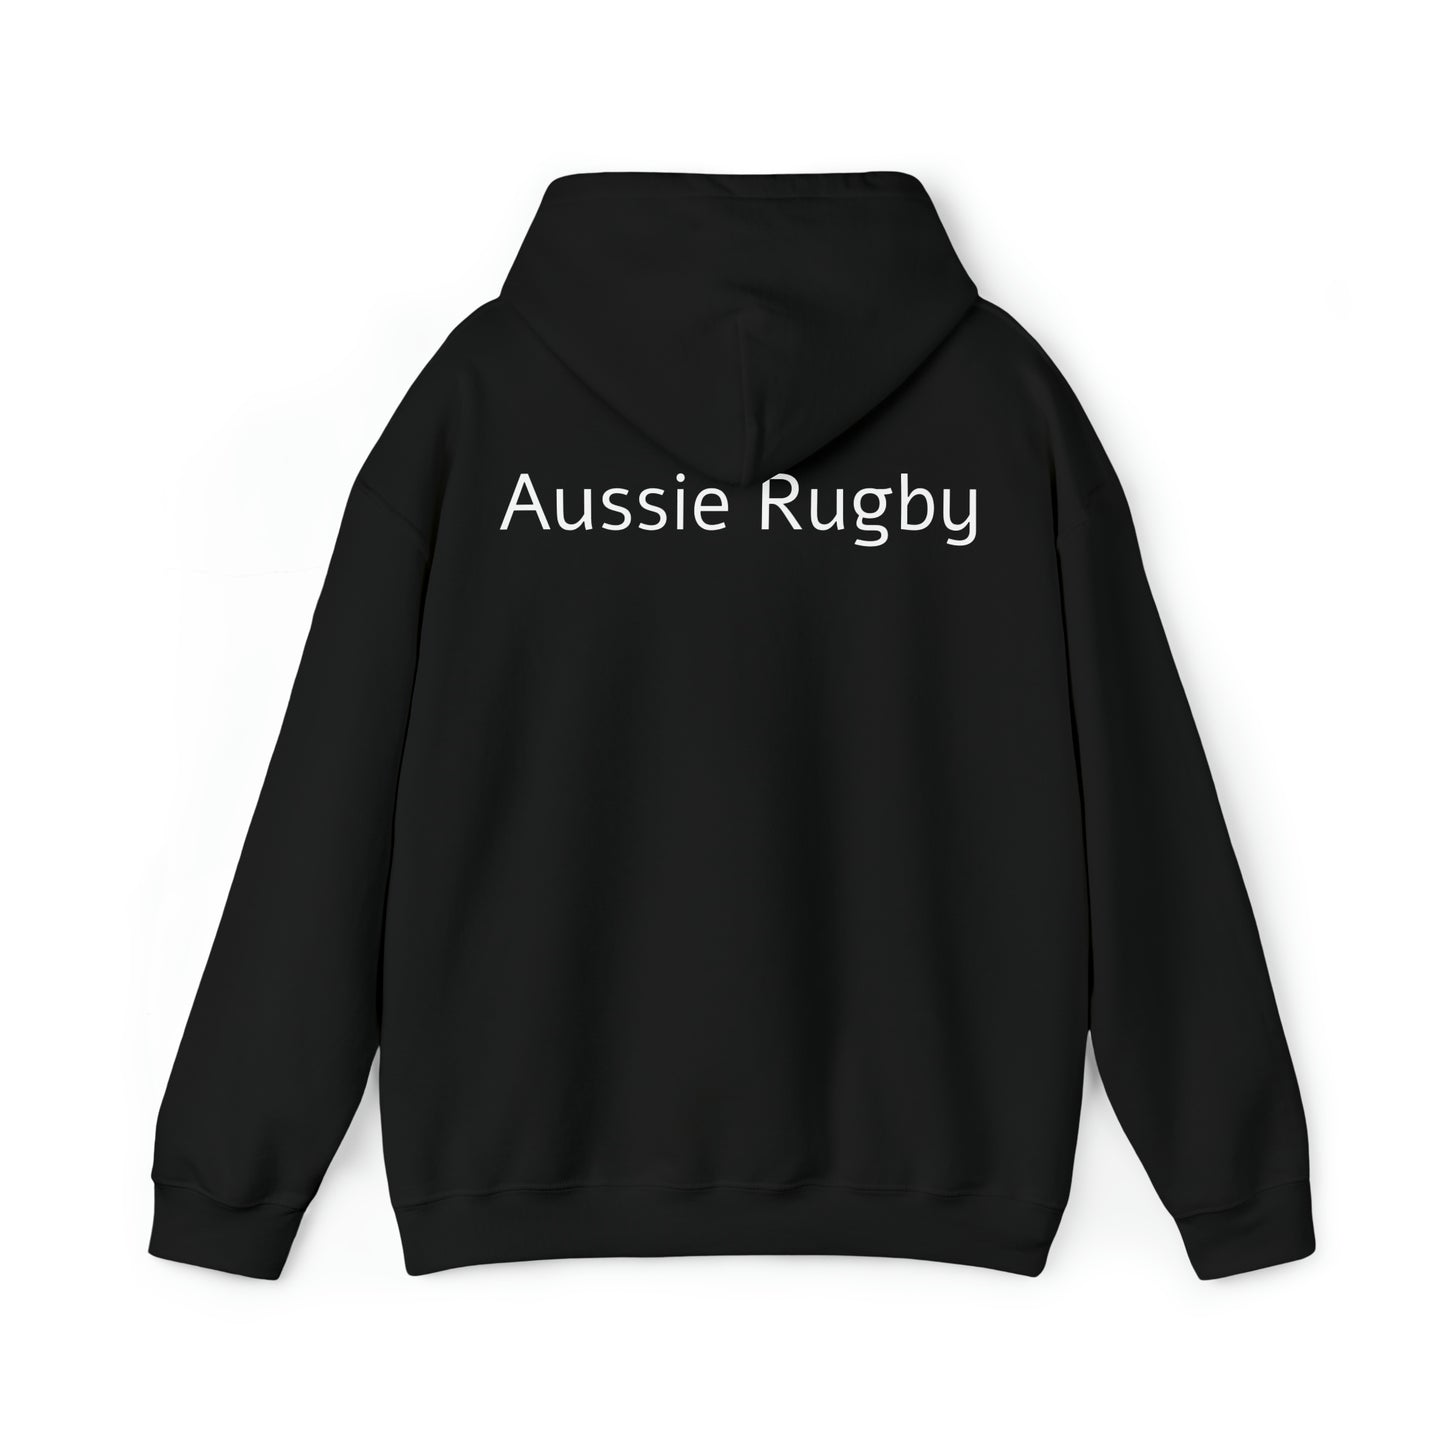 Australia celebrating with RWC - black hoodie